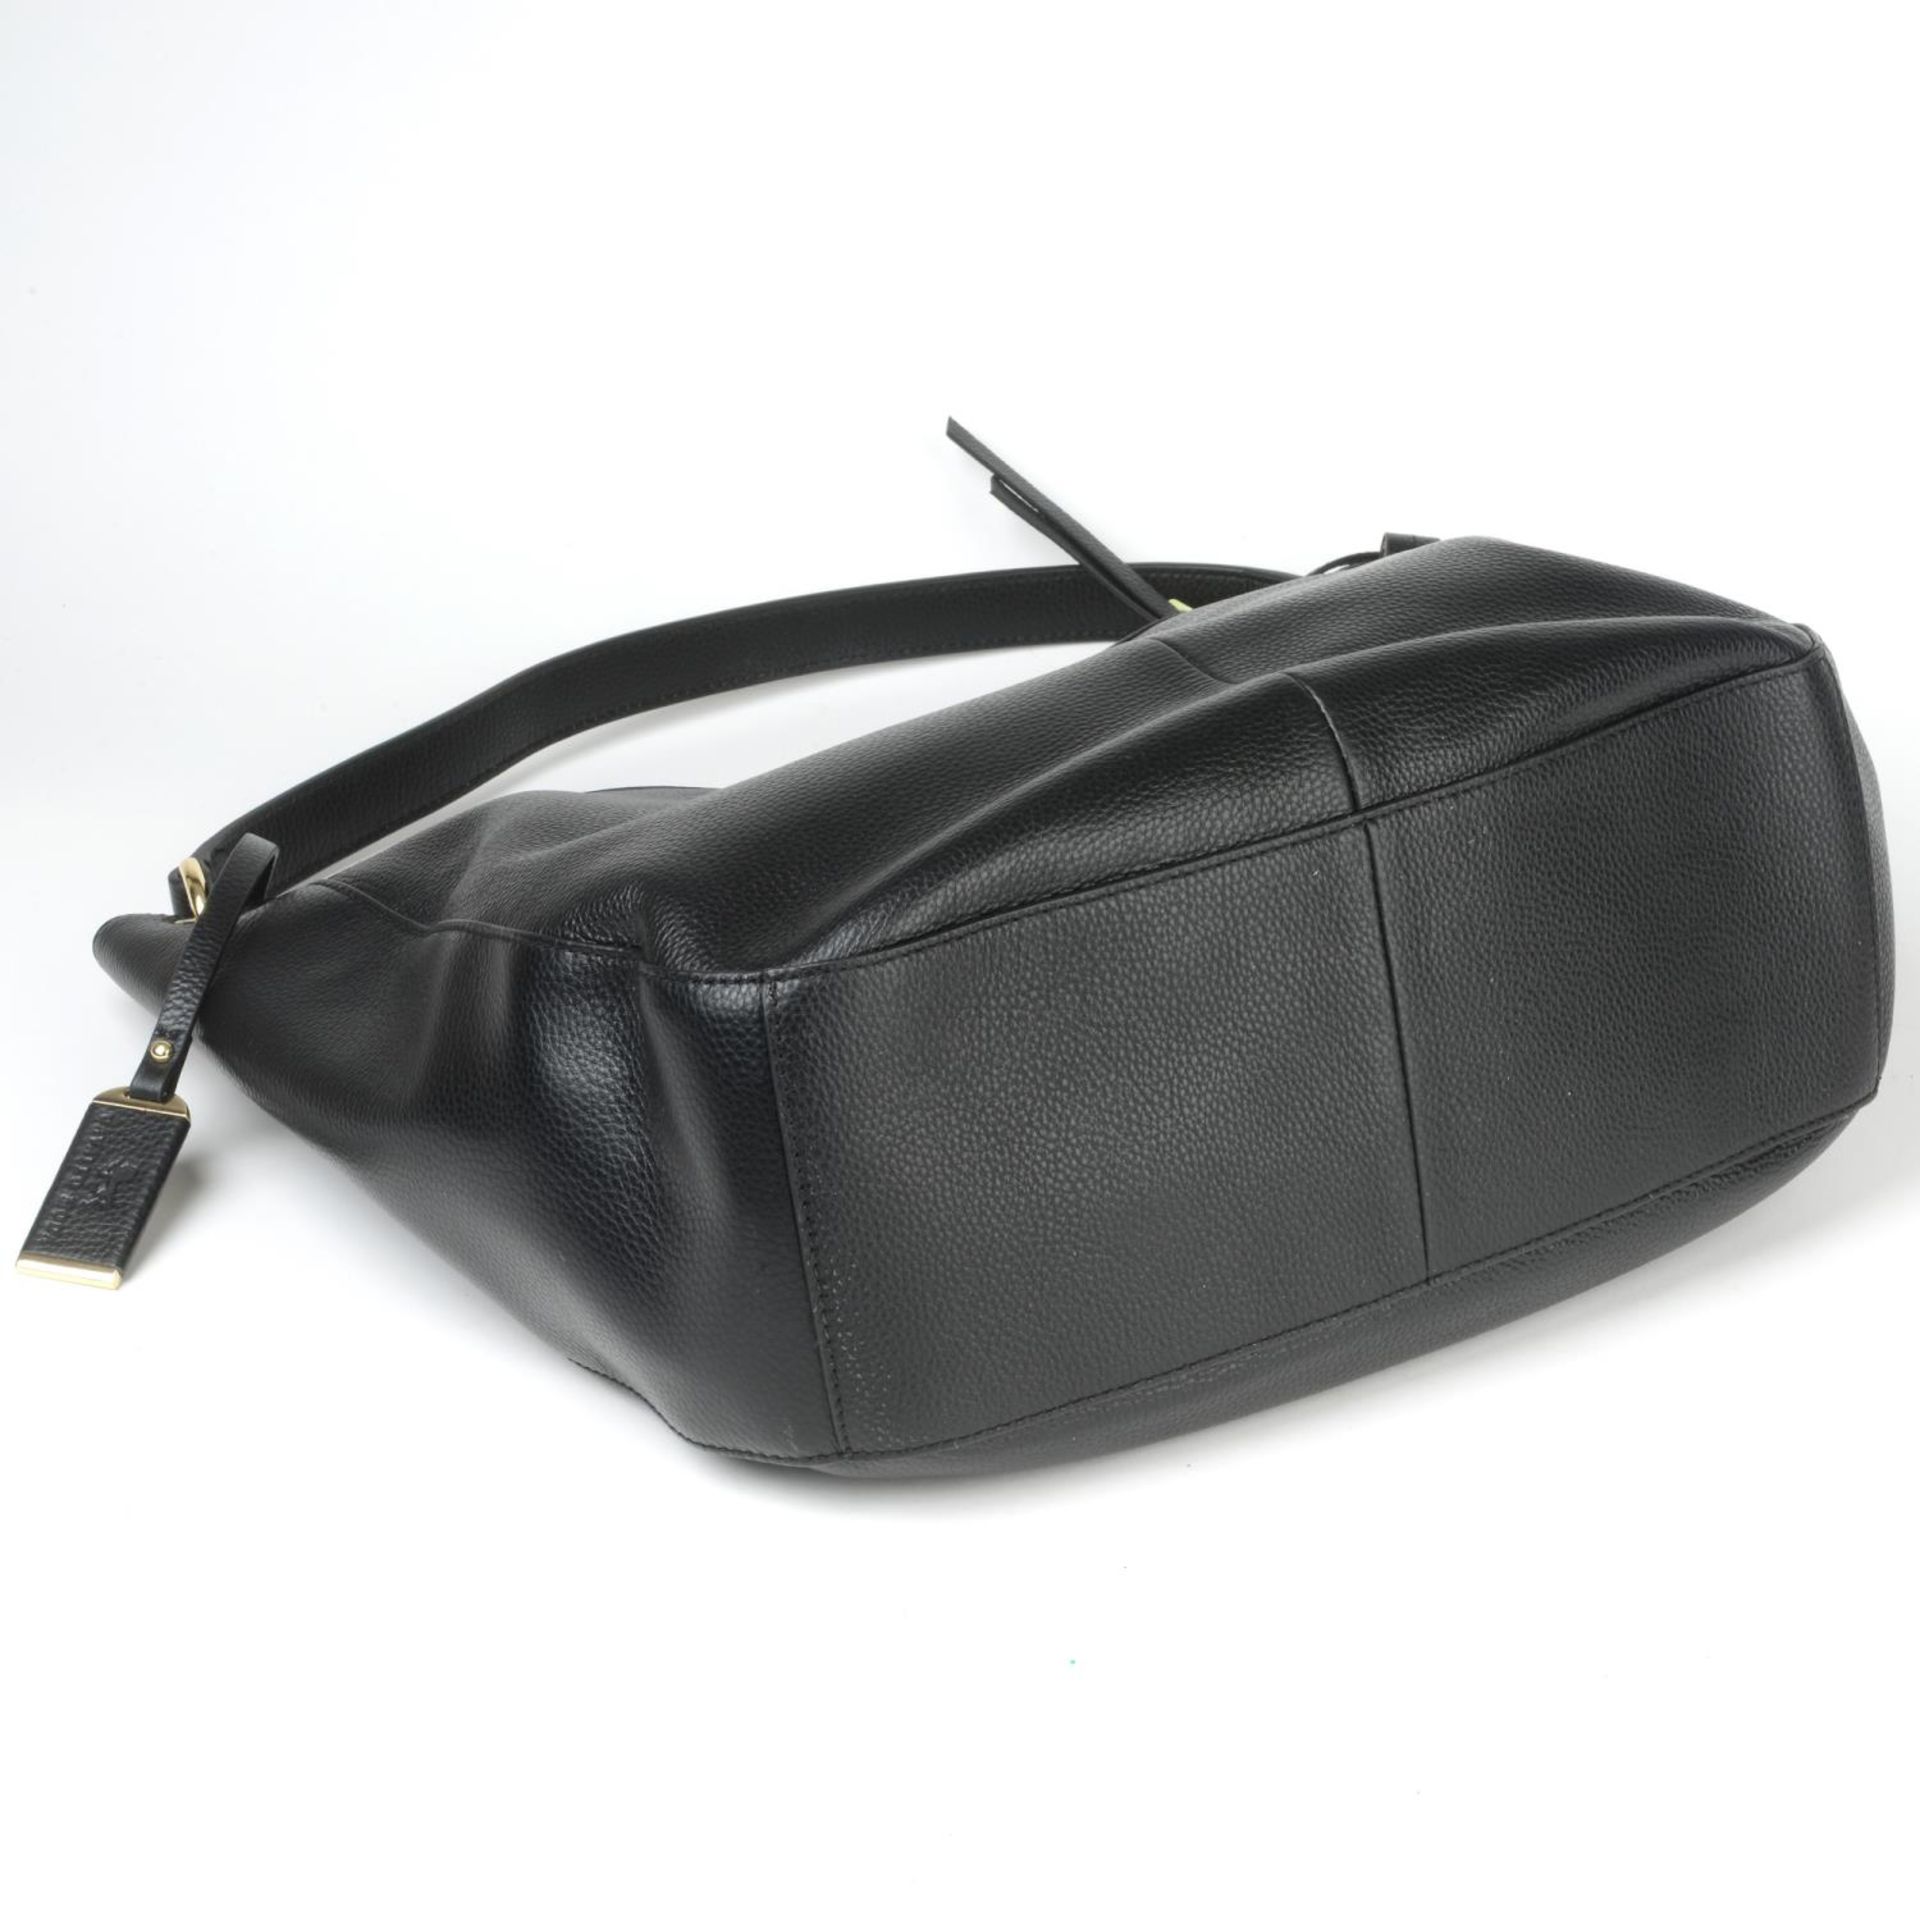 CAVALLO MODA - two leather handbags. - Bild 3 aus 4